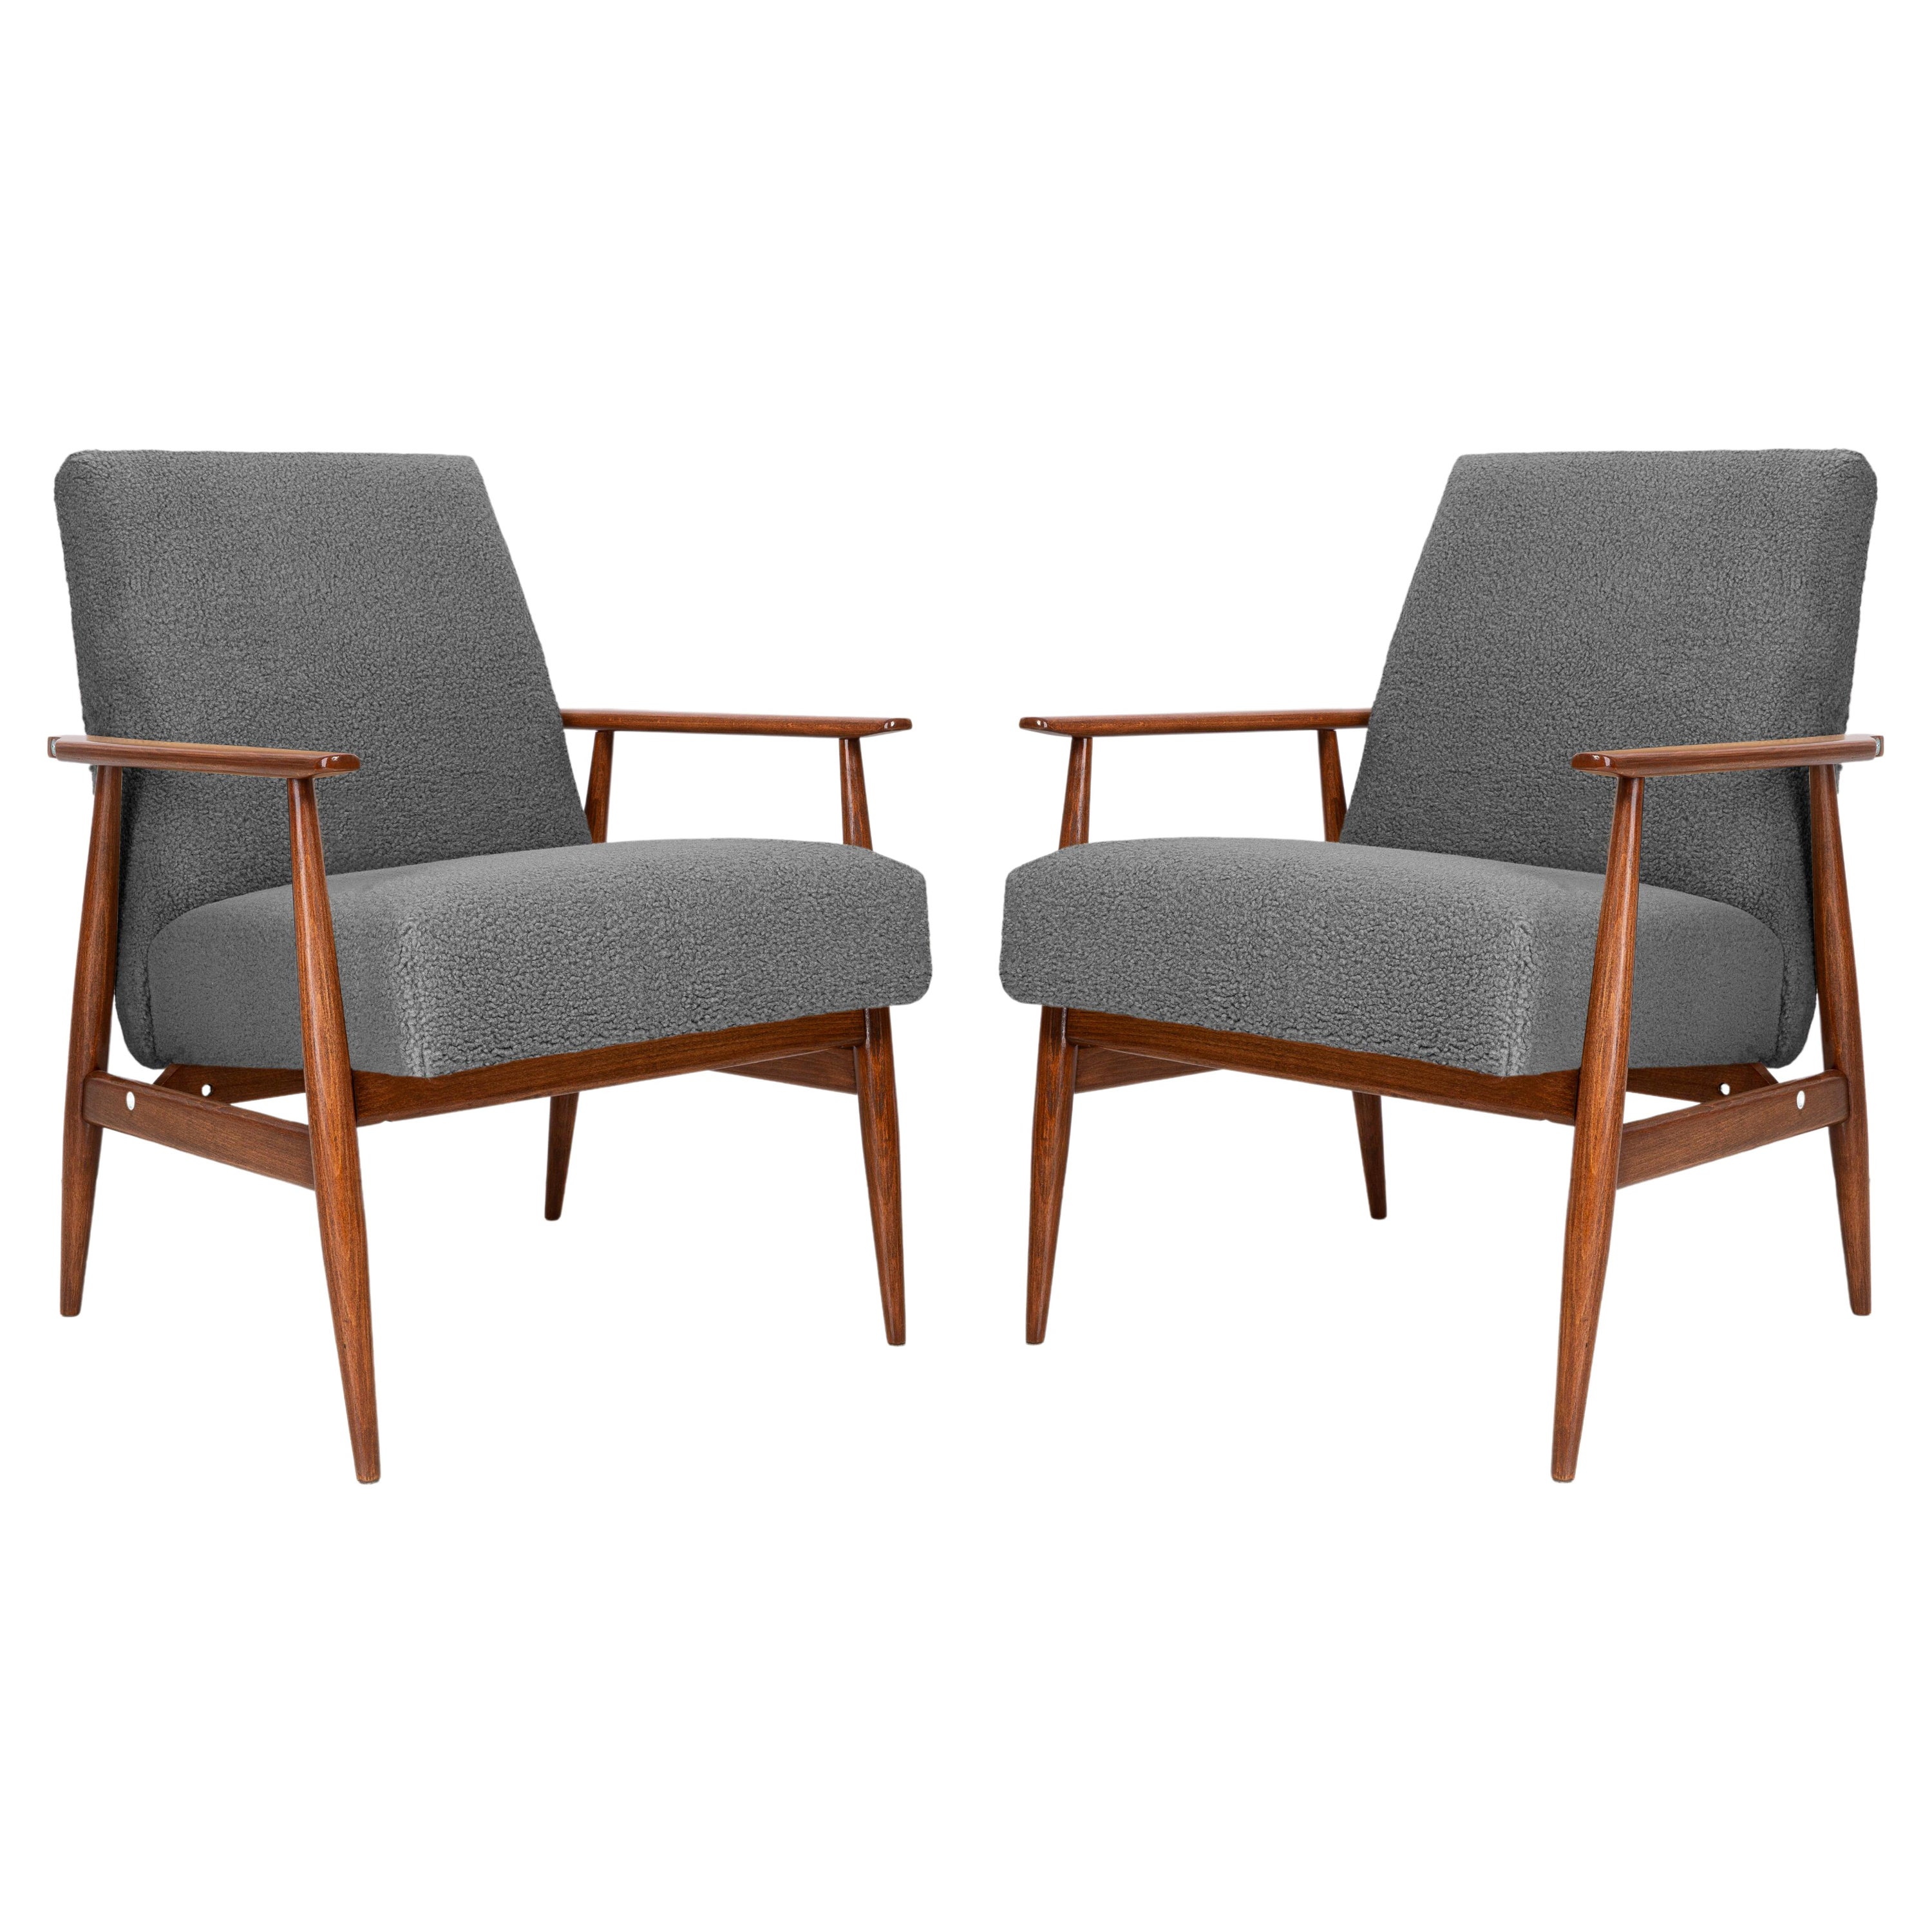 Paar graue Boucl-Dante-Sessel aus der Jahrhundertmitte, H. Lis, 1960er Jahre